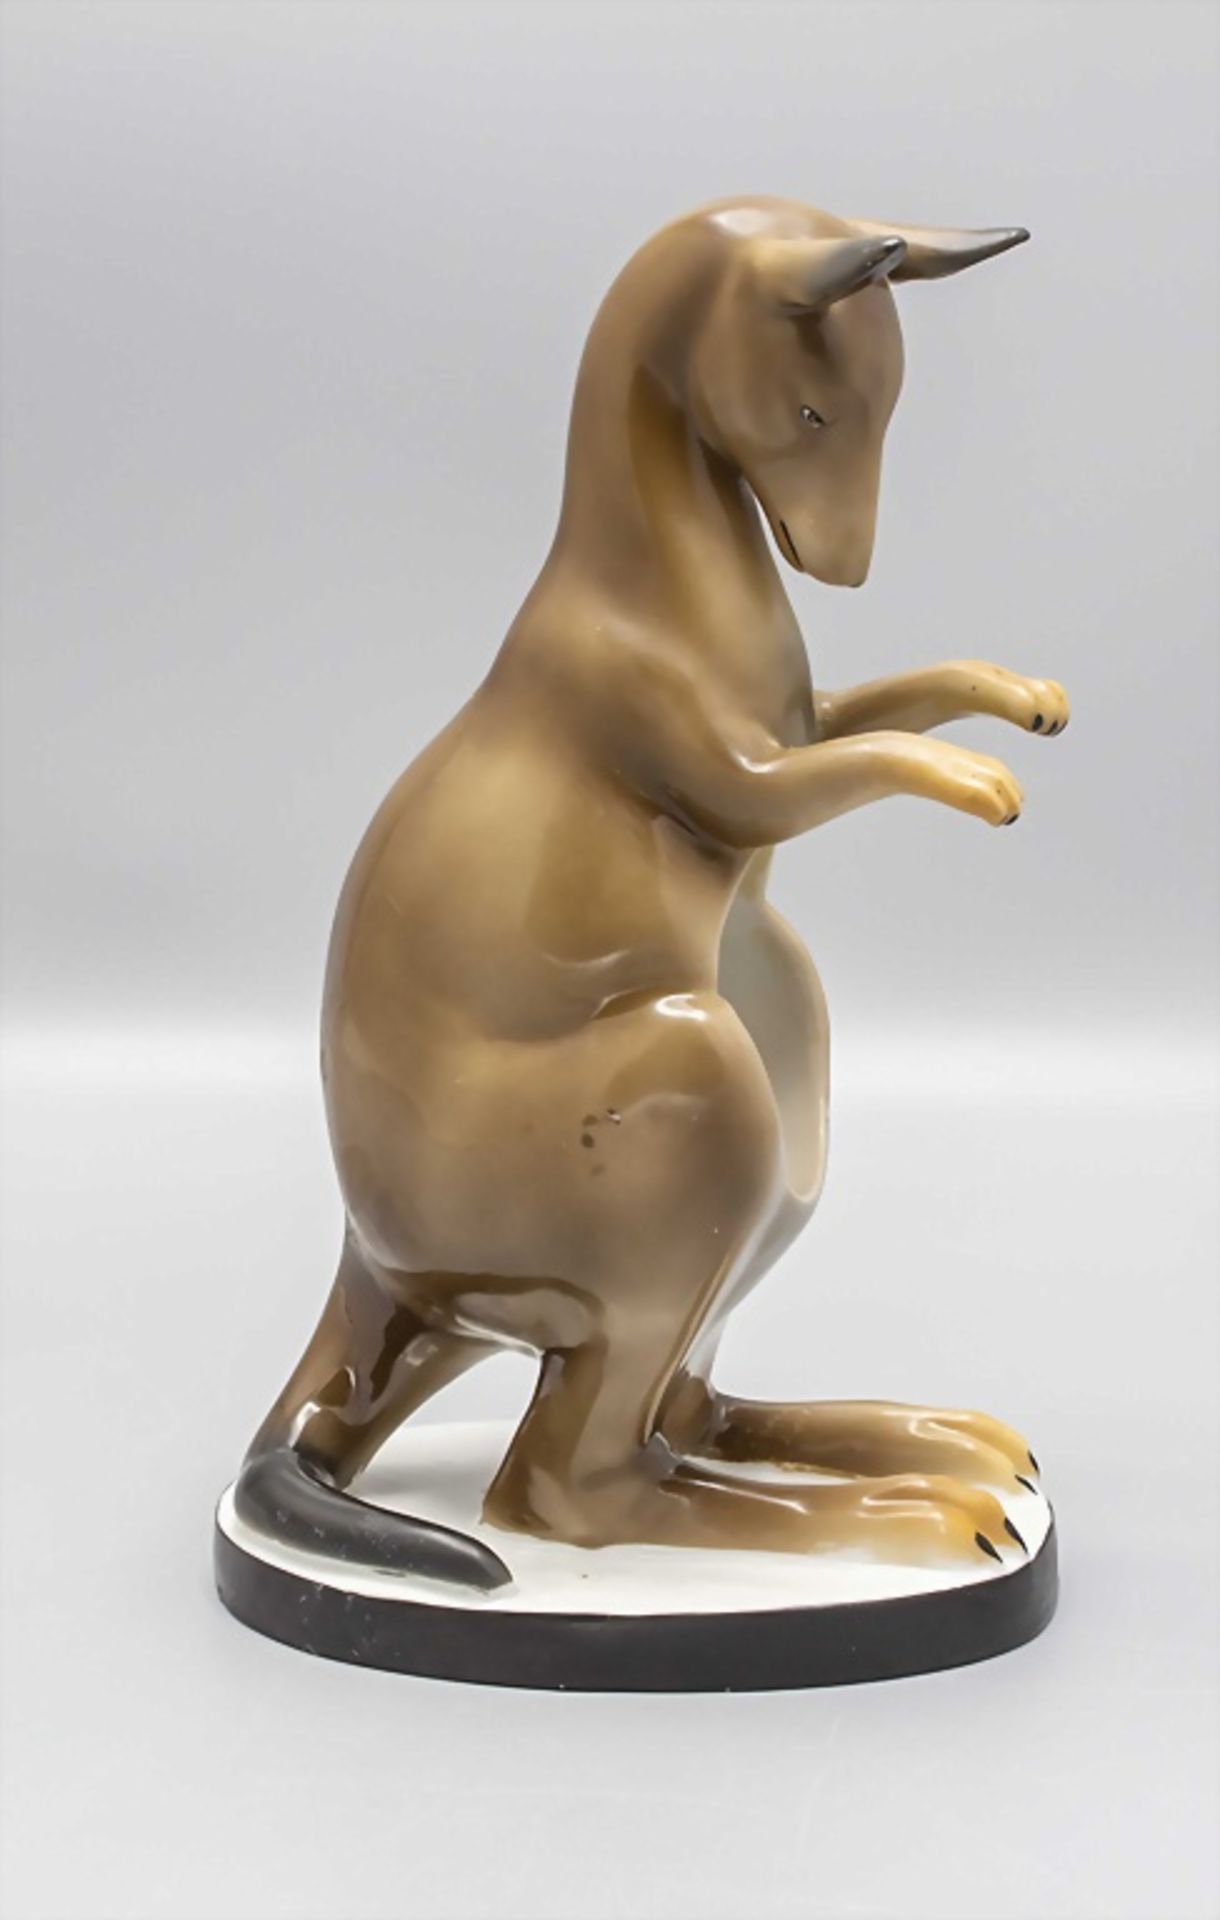 Porzallan Känguru als Halter / A porcelain kangaroo as holder, Anfang 20. Jh. - Image 3 of 6